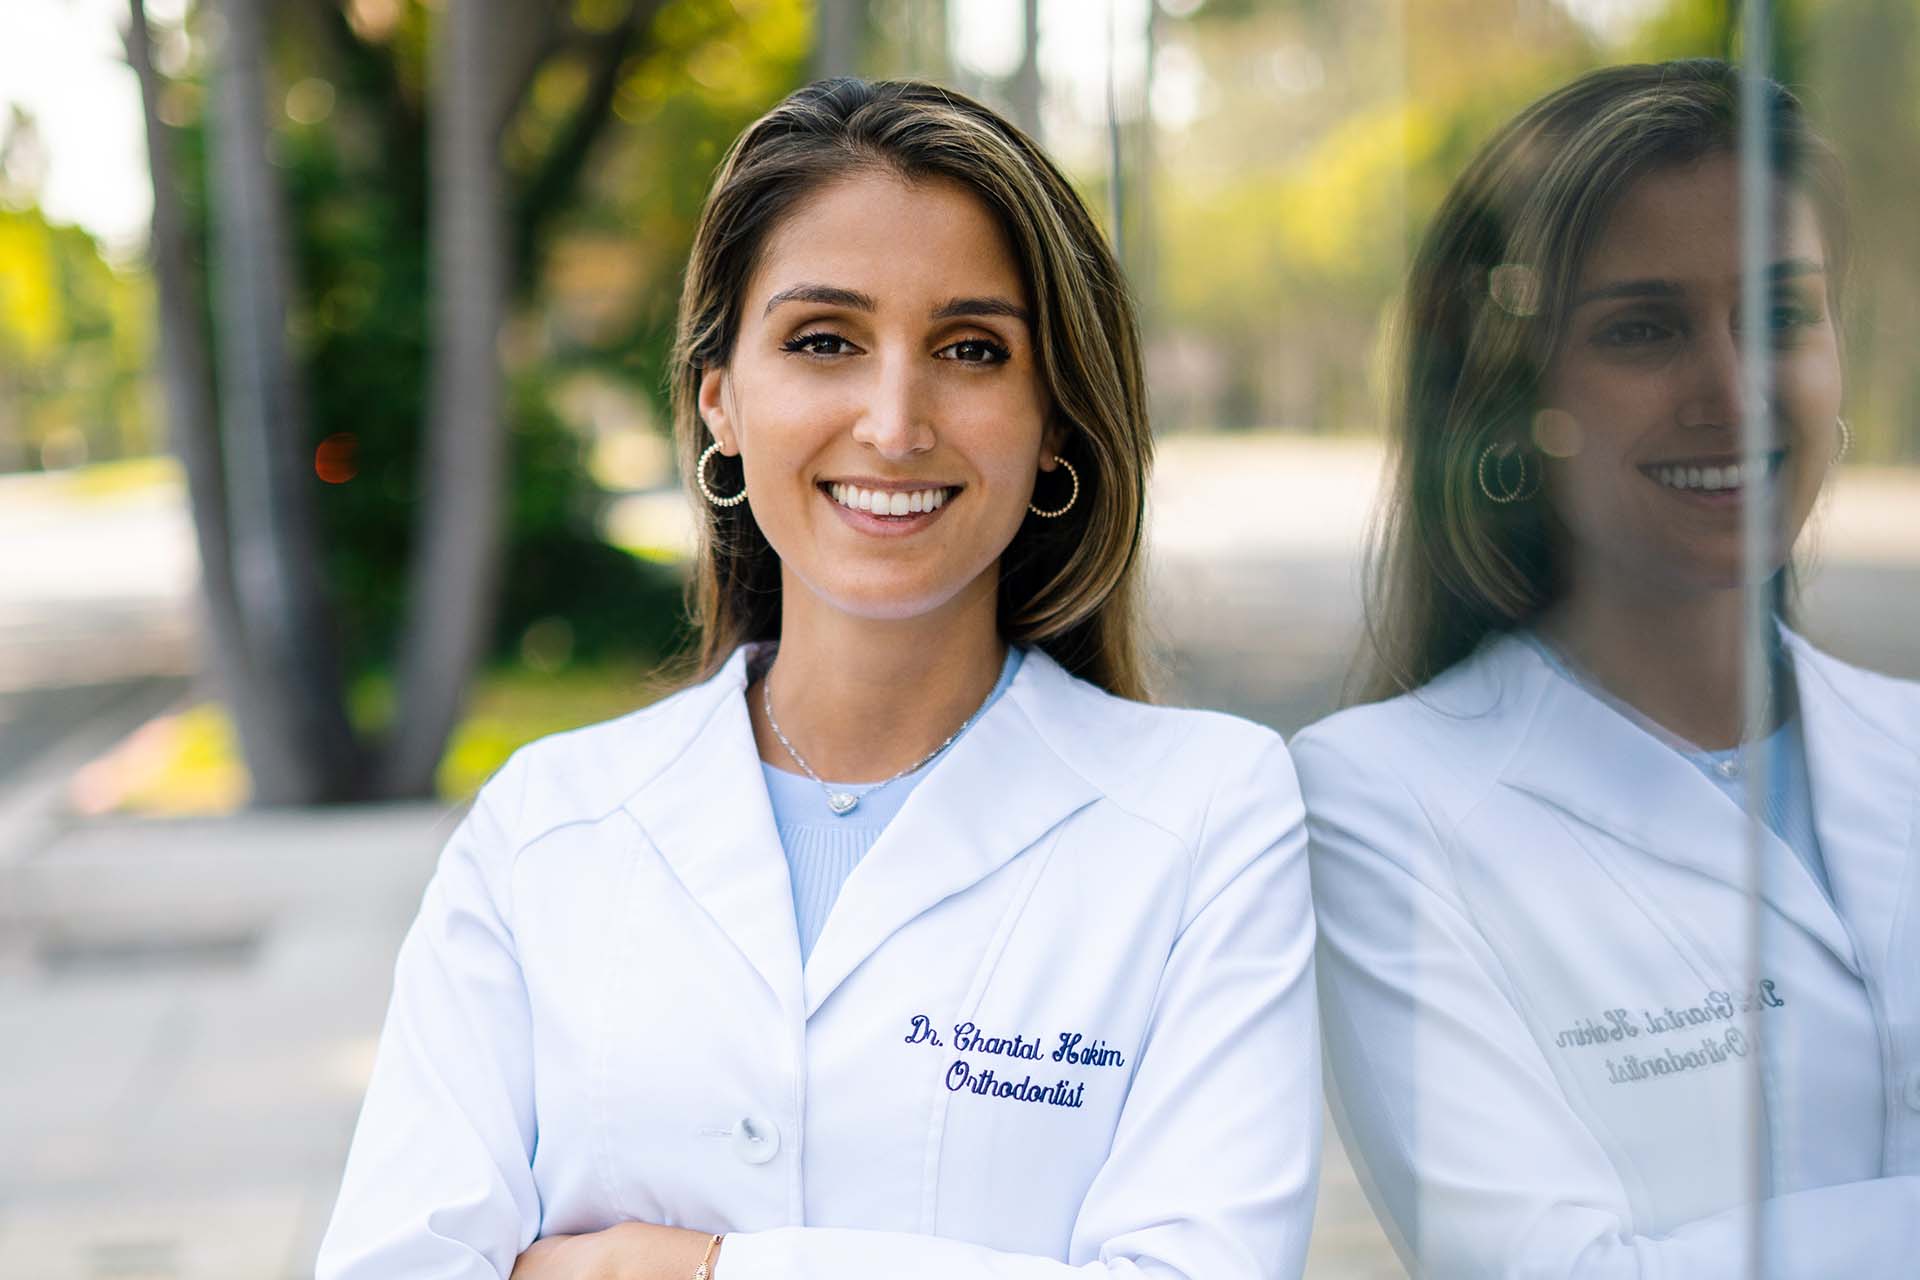 Dr Chantal Hakim of the Orthospaceship - Hakim Orthodontics serving Beverly Crest, Los Angeles